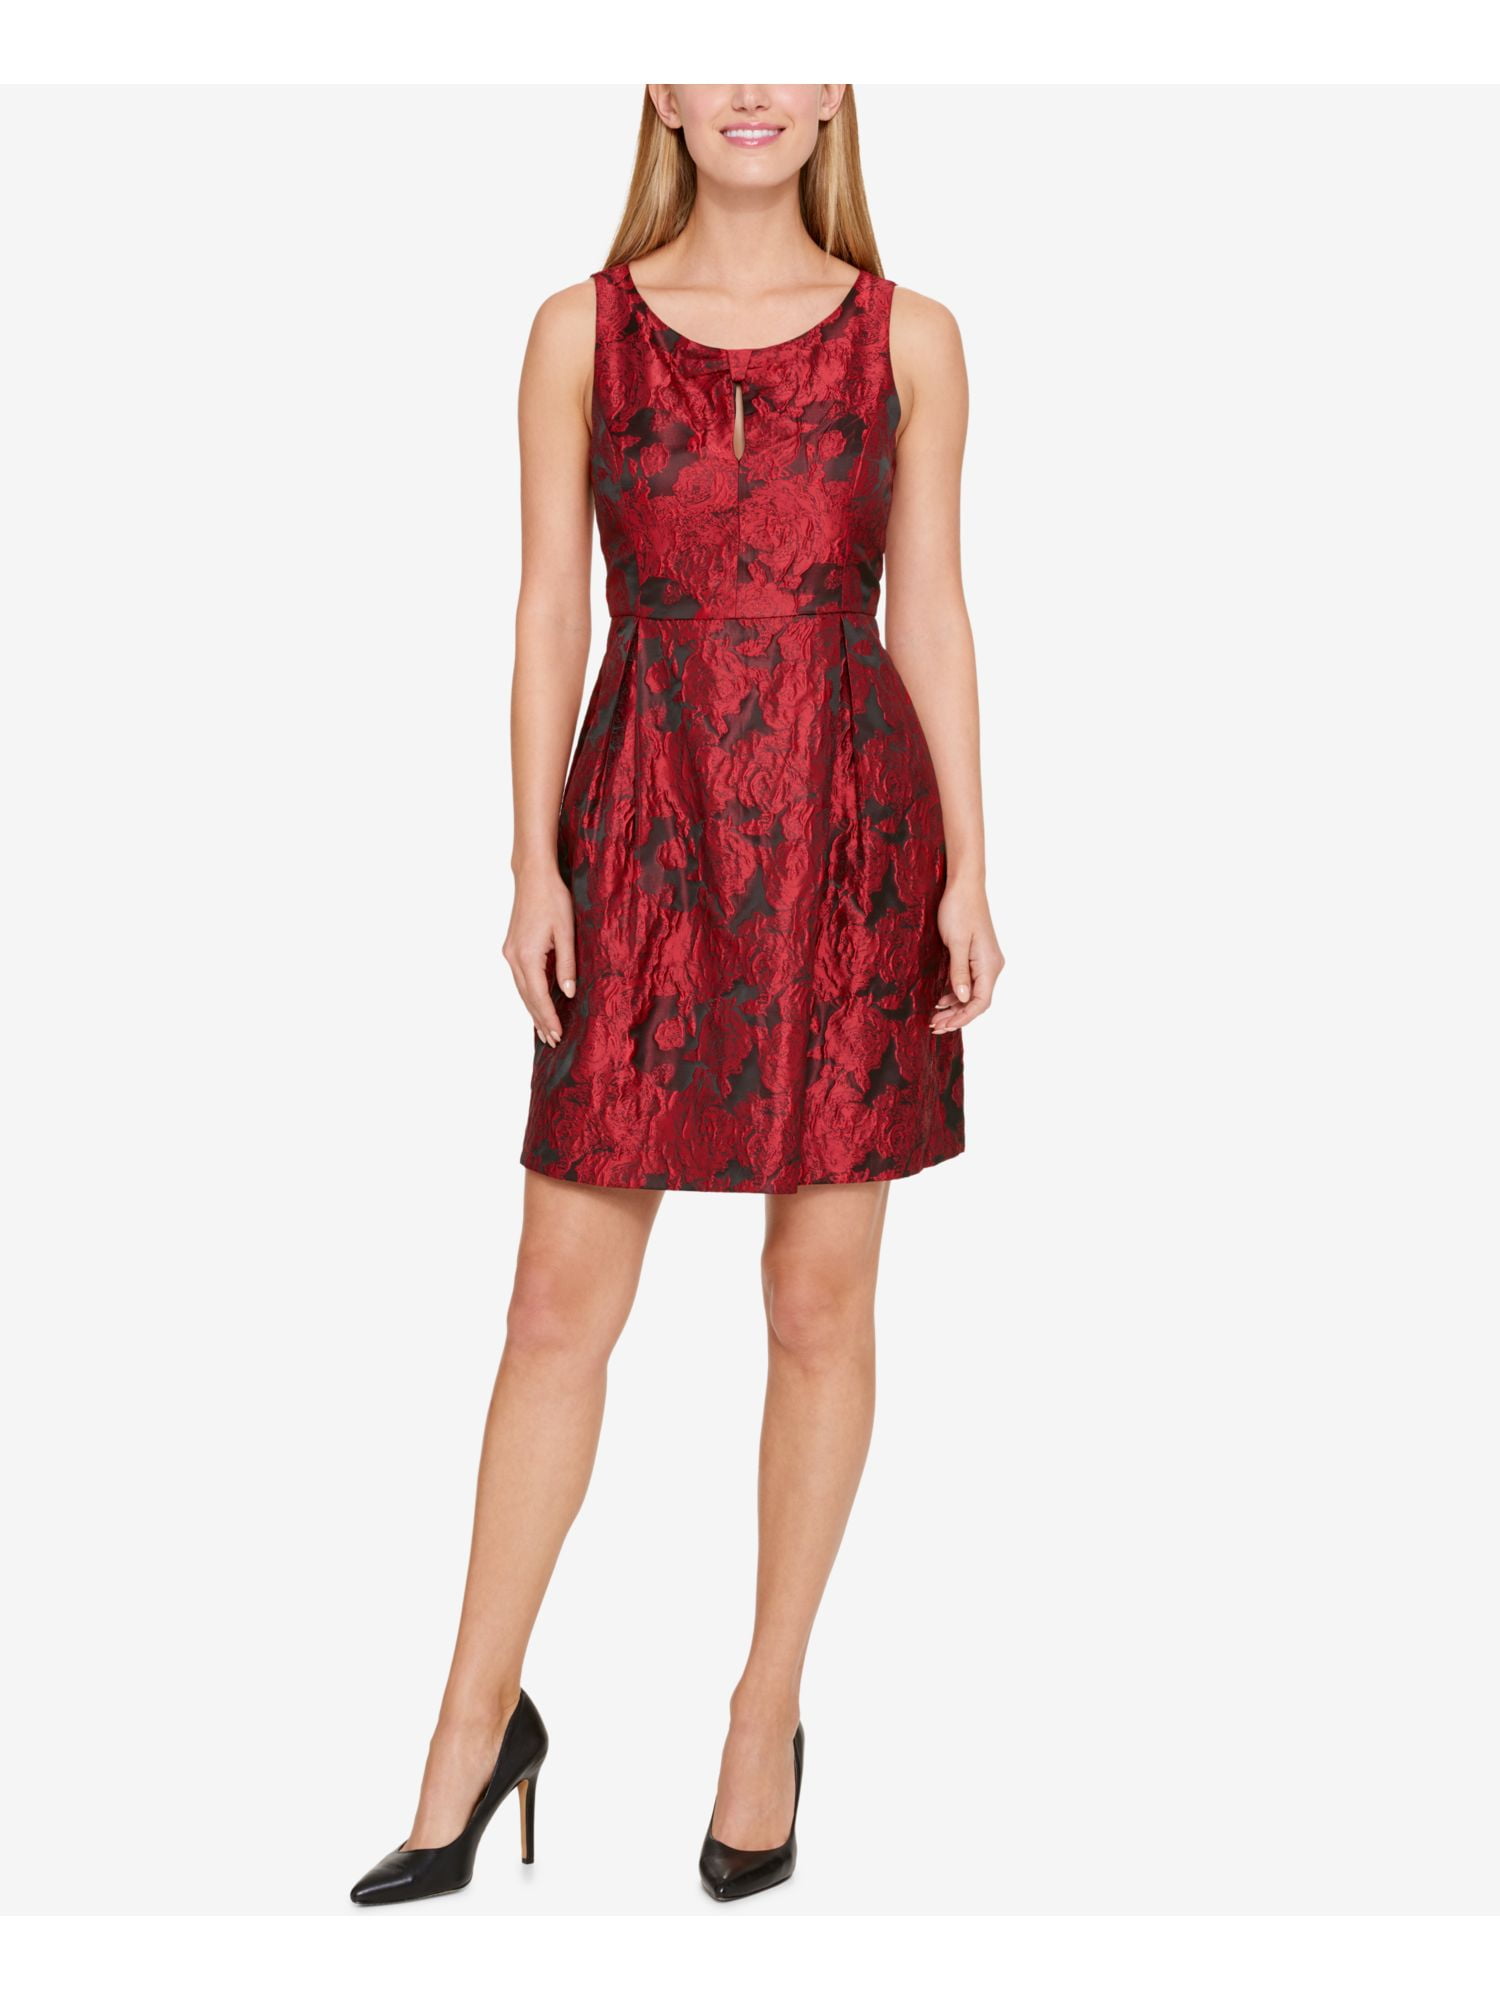 TOMMY HILFIGER $139 Womens New 1285 Red Floral Fit + Flare Dress 14 B+B